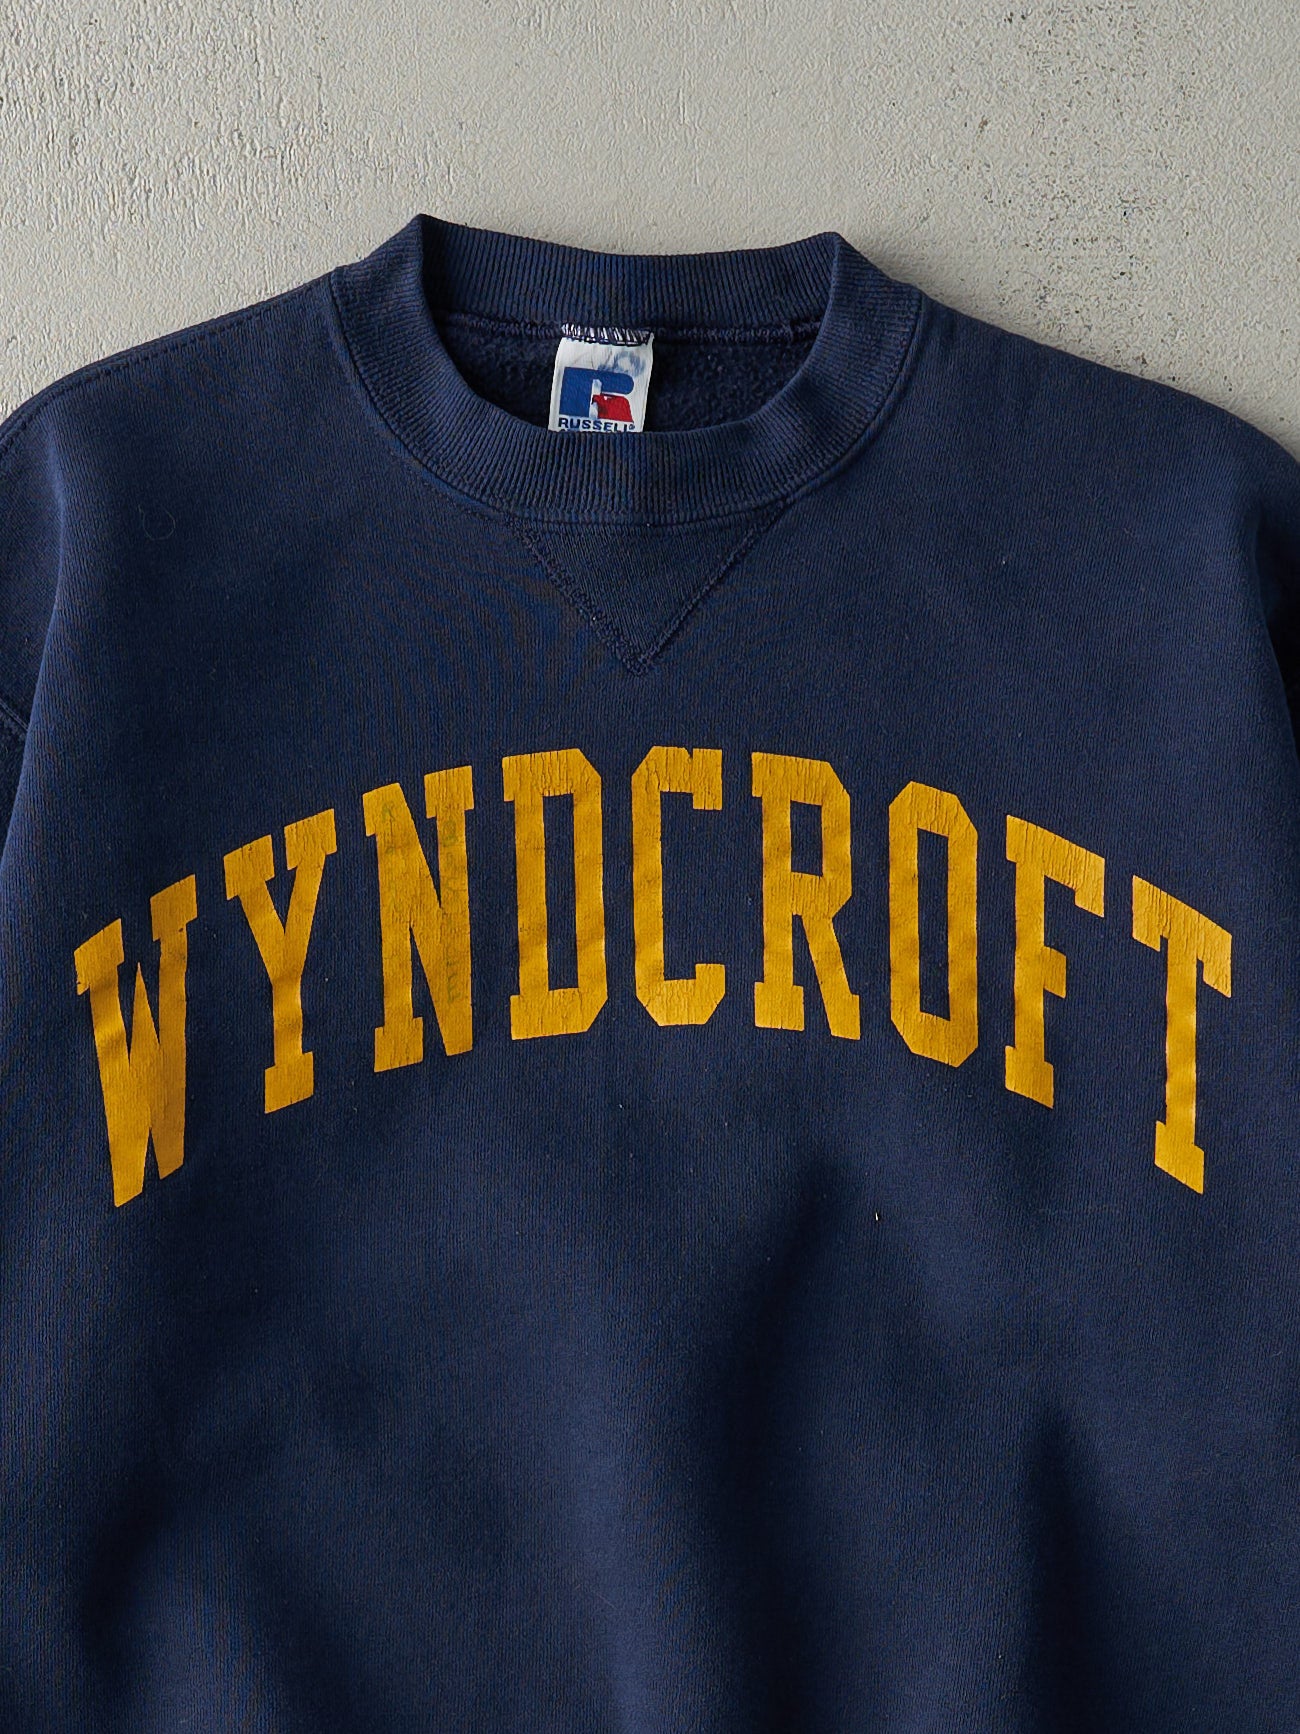 Vintage 90s Navy Blue Wyndcroft Russell Athletics Crewneck (S)